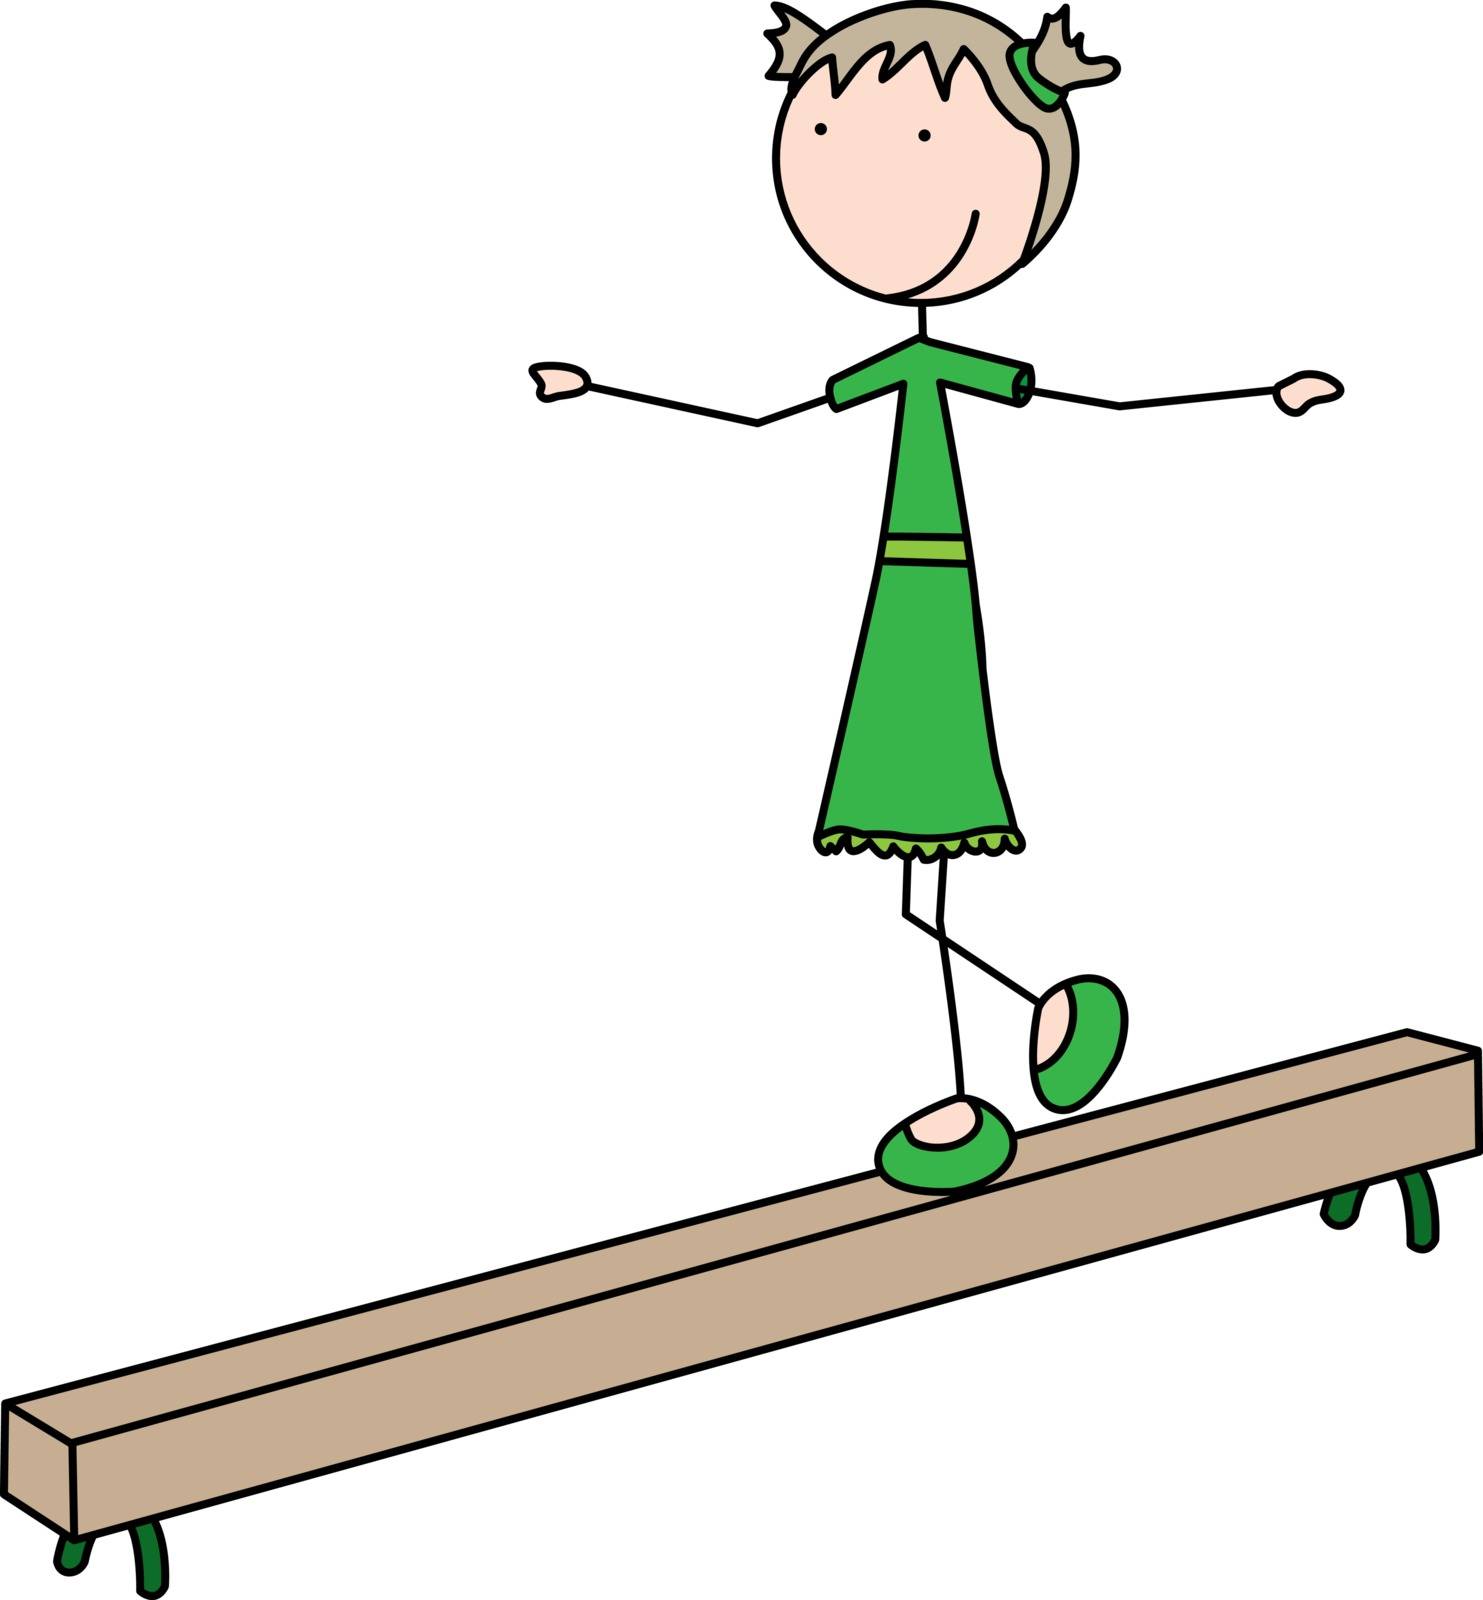 Cartoon illustration of a girl walking on a balance beam